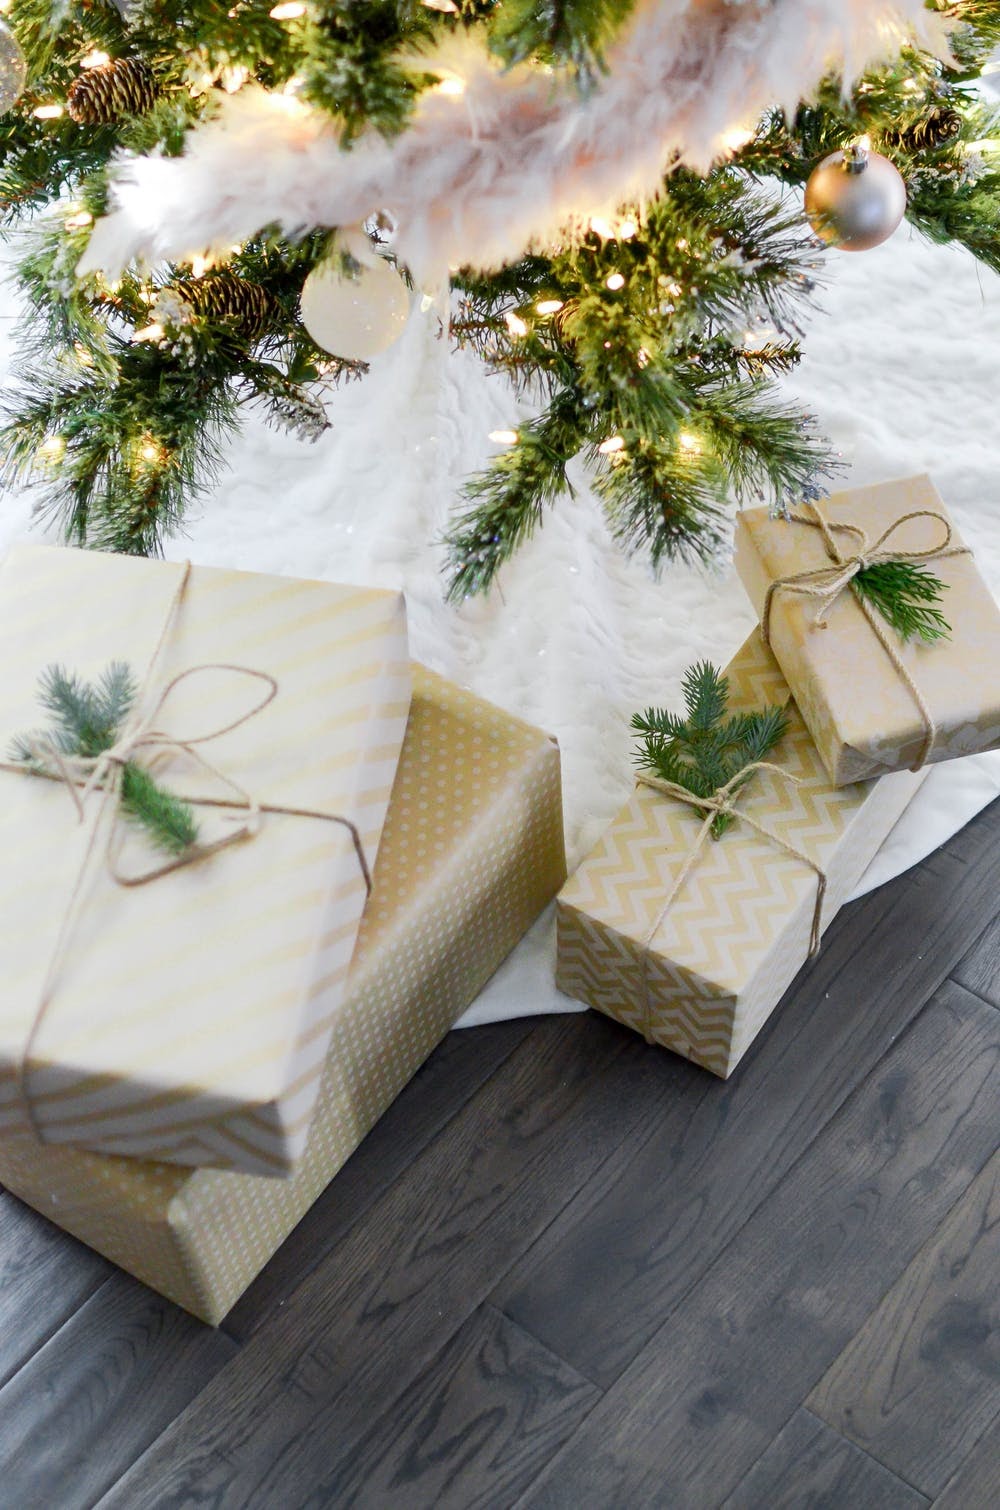 Christmas-gift-ideas